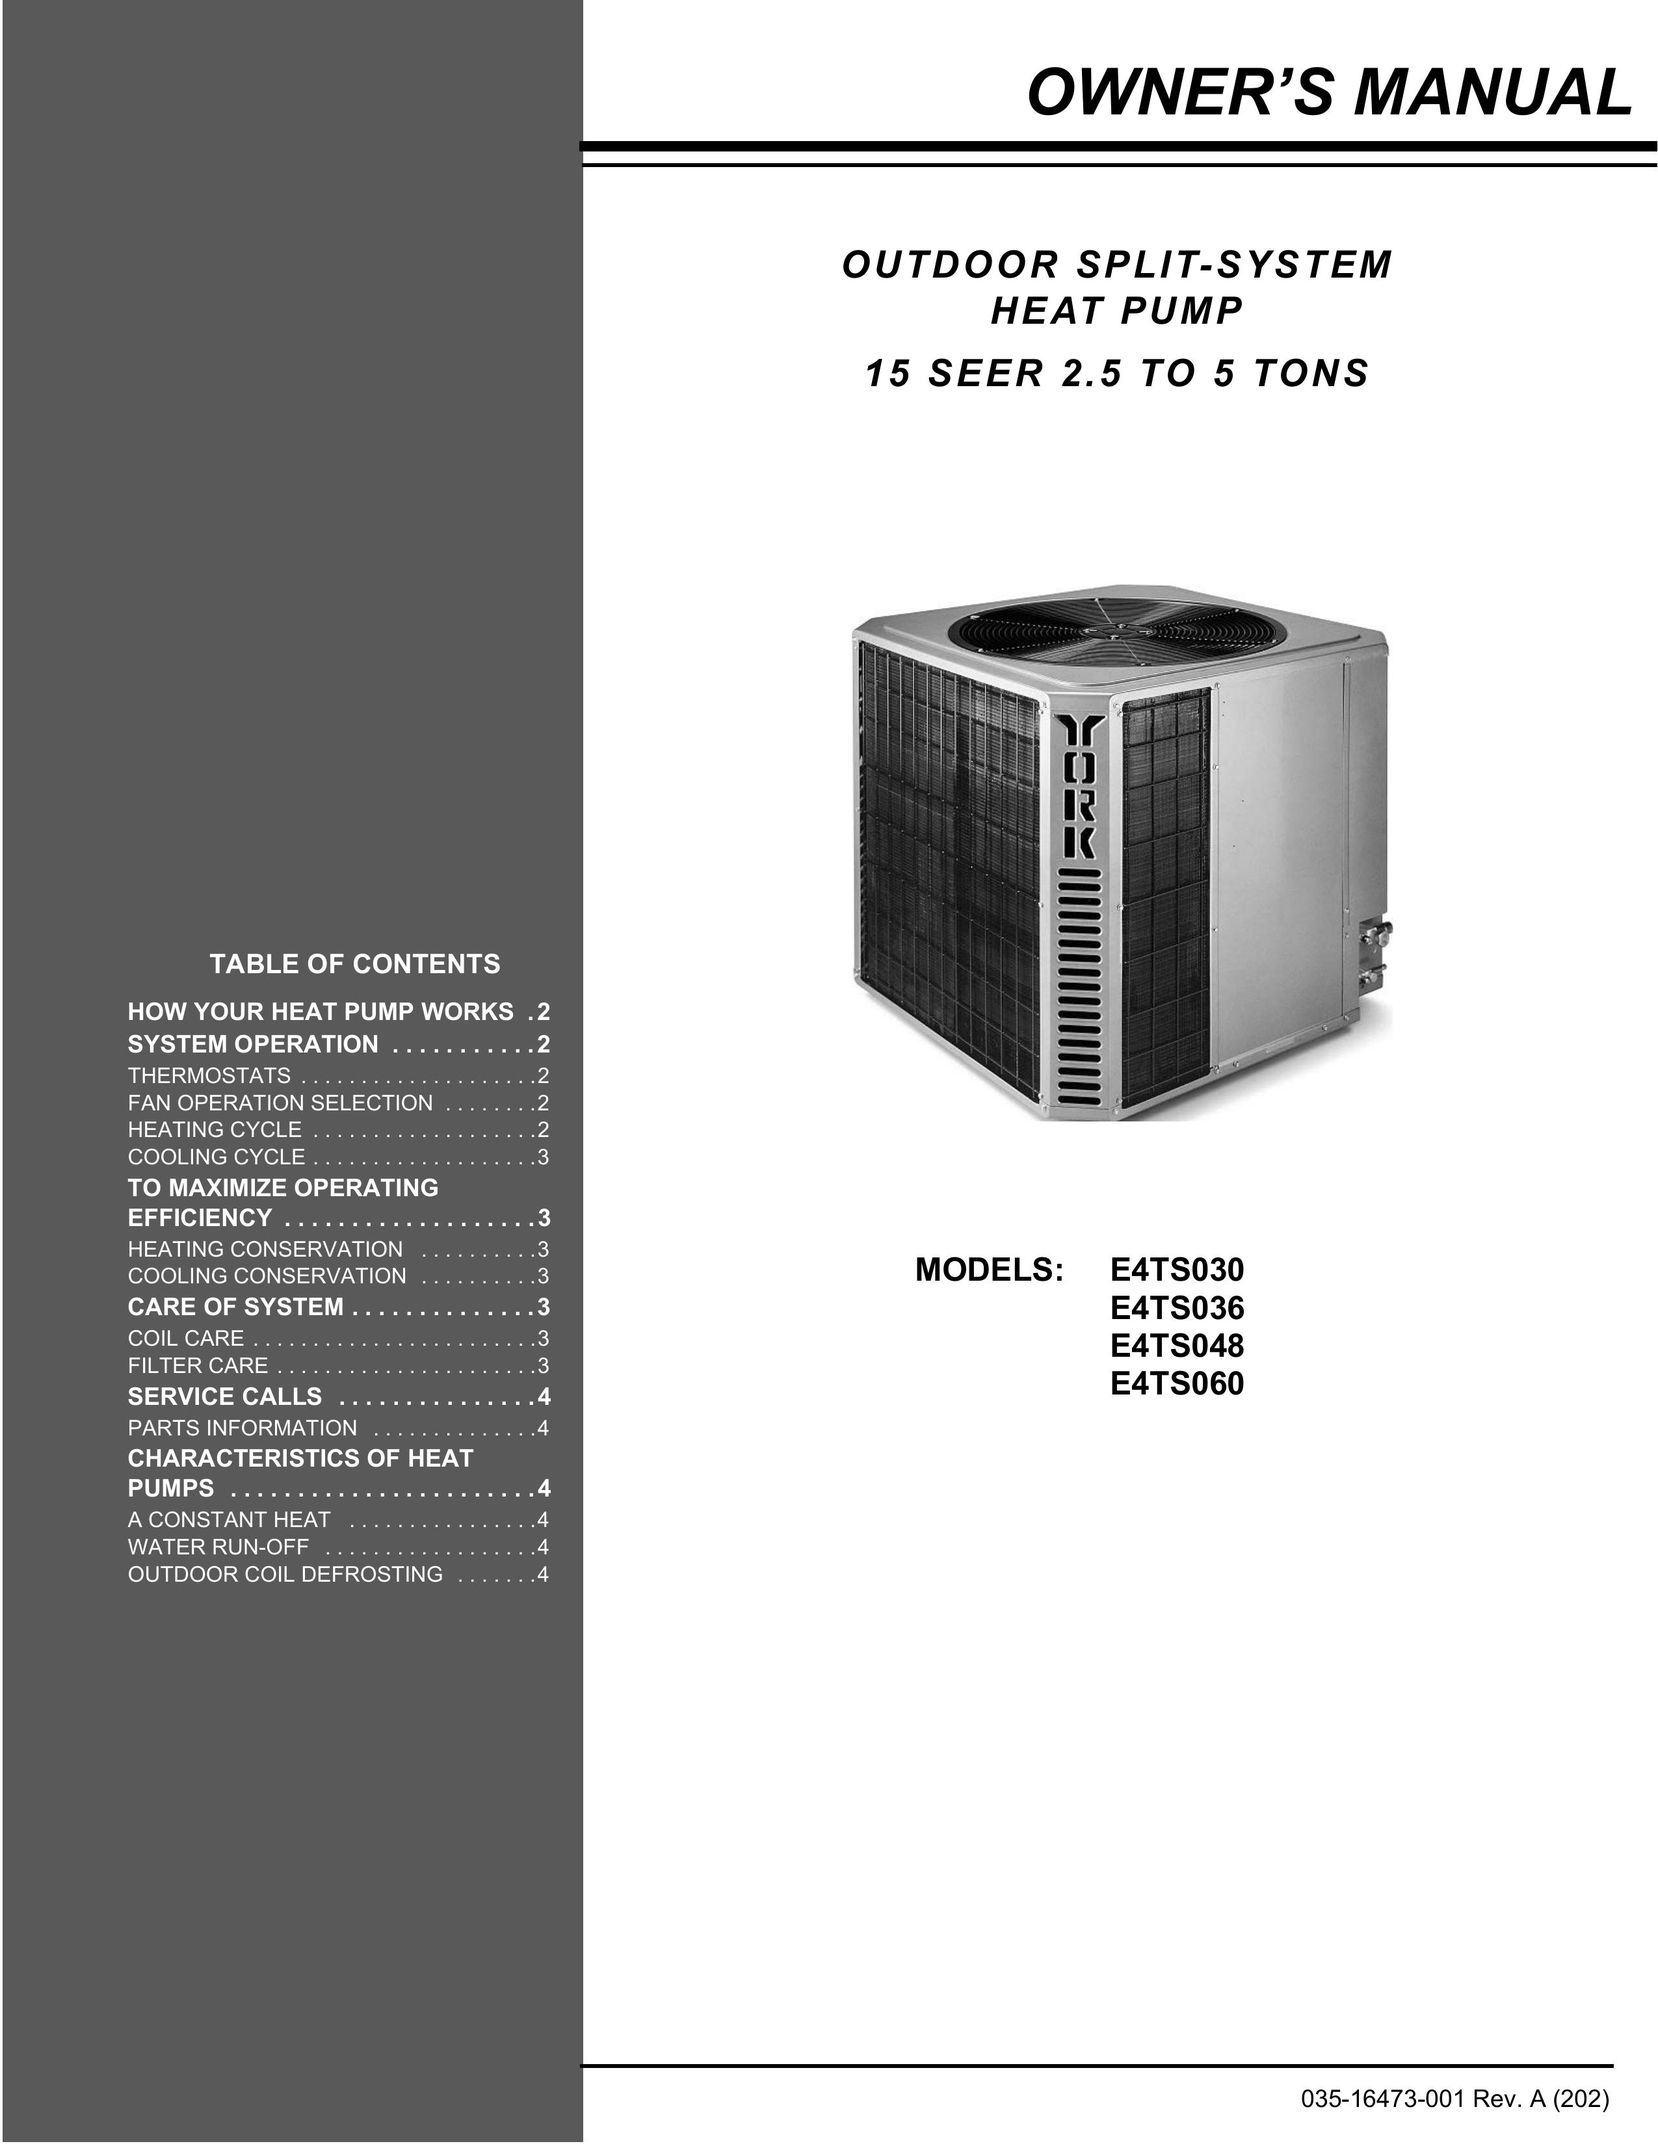 York E4TS030 Heat Pump User Manual